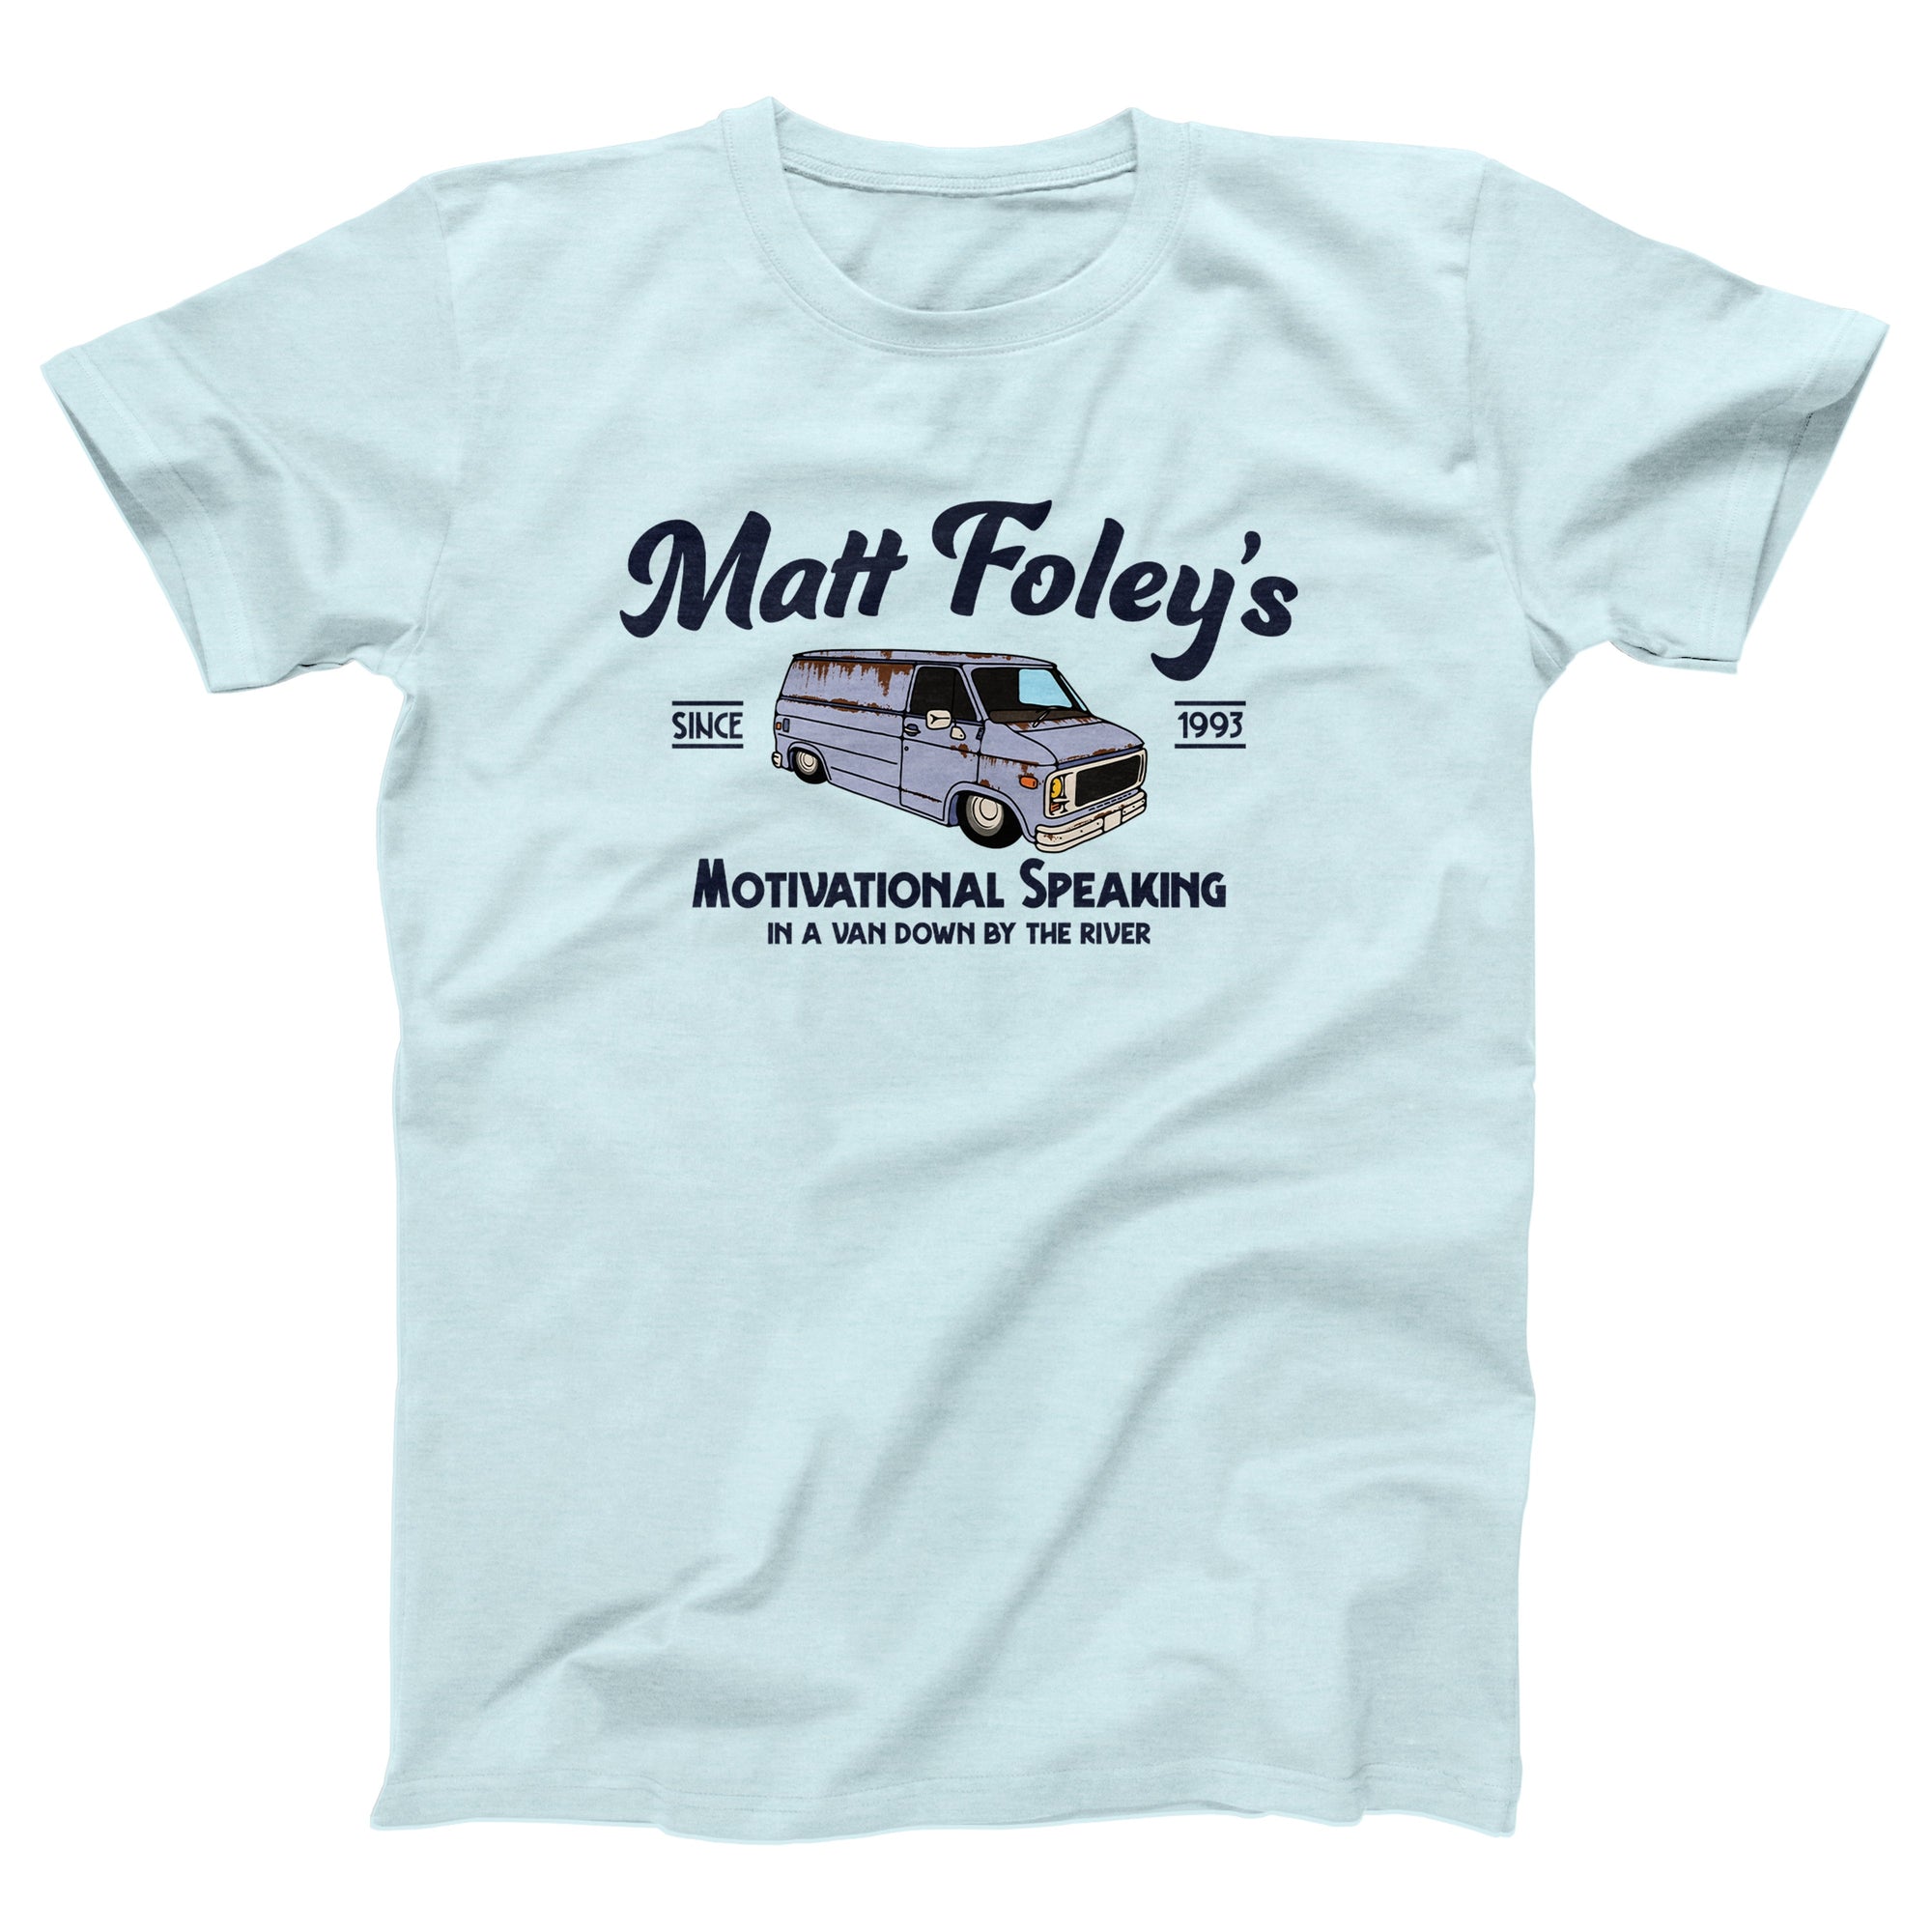 Matt Foley's Motivational Speaking Adult Unisex T-Shirt